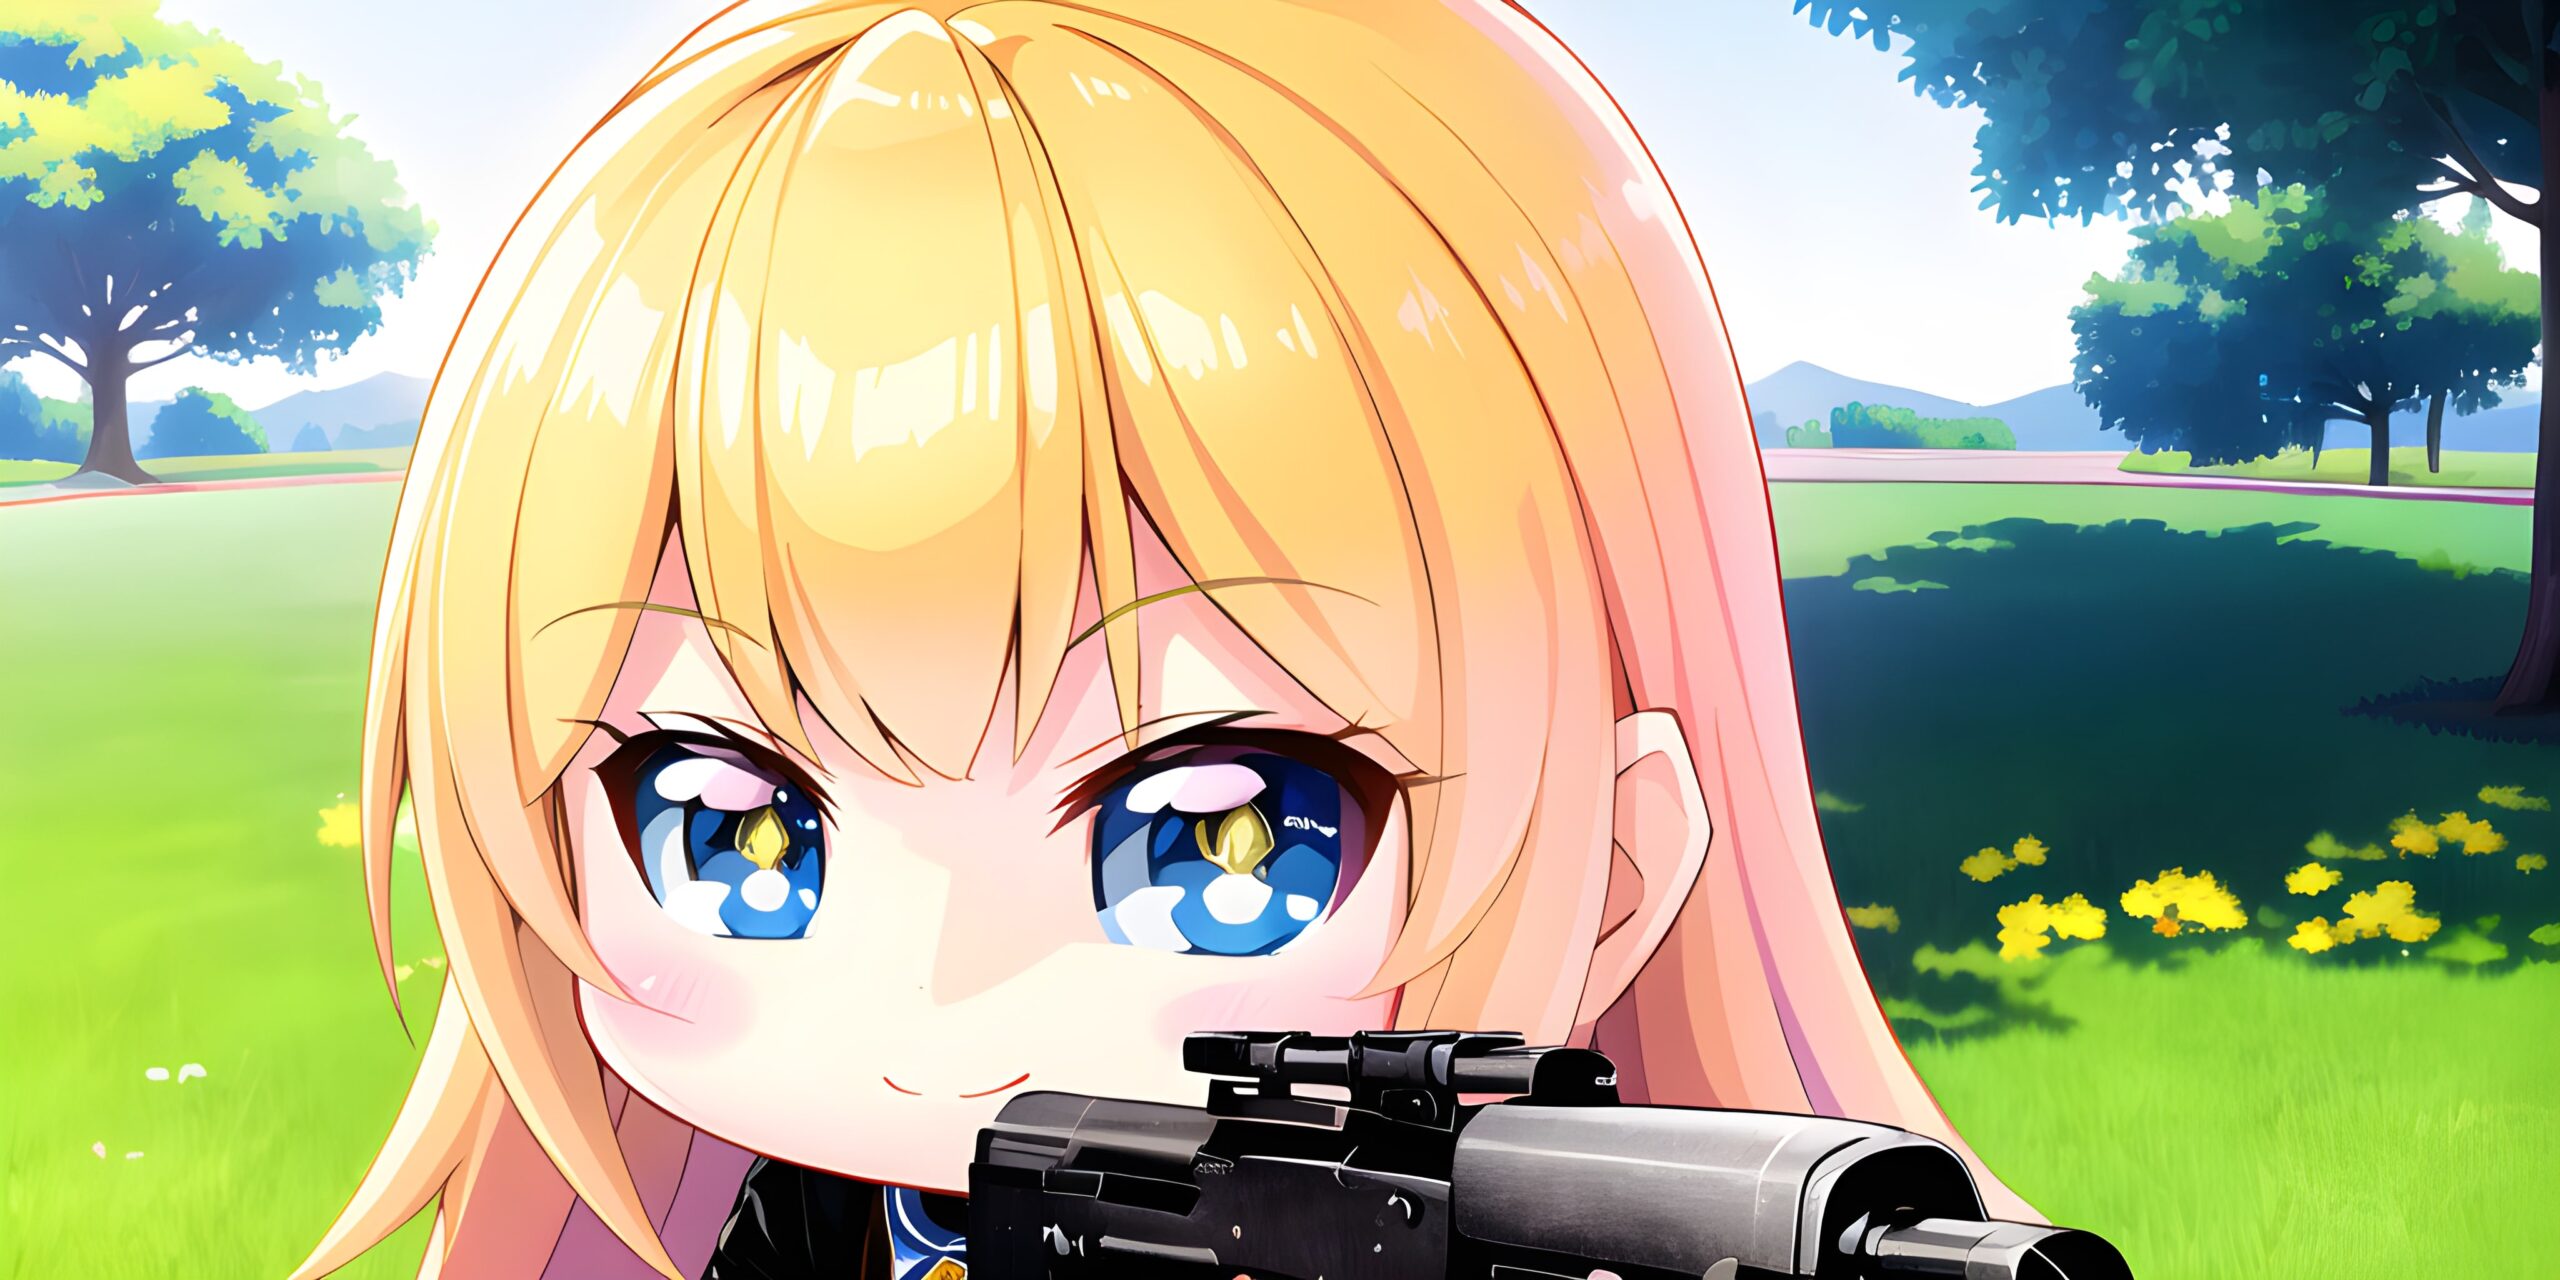 Aiming Chibi Girl with a Gun